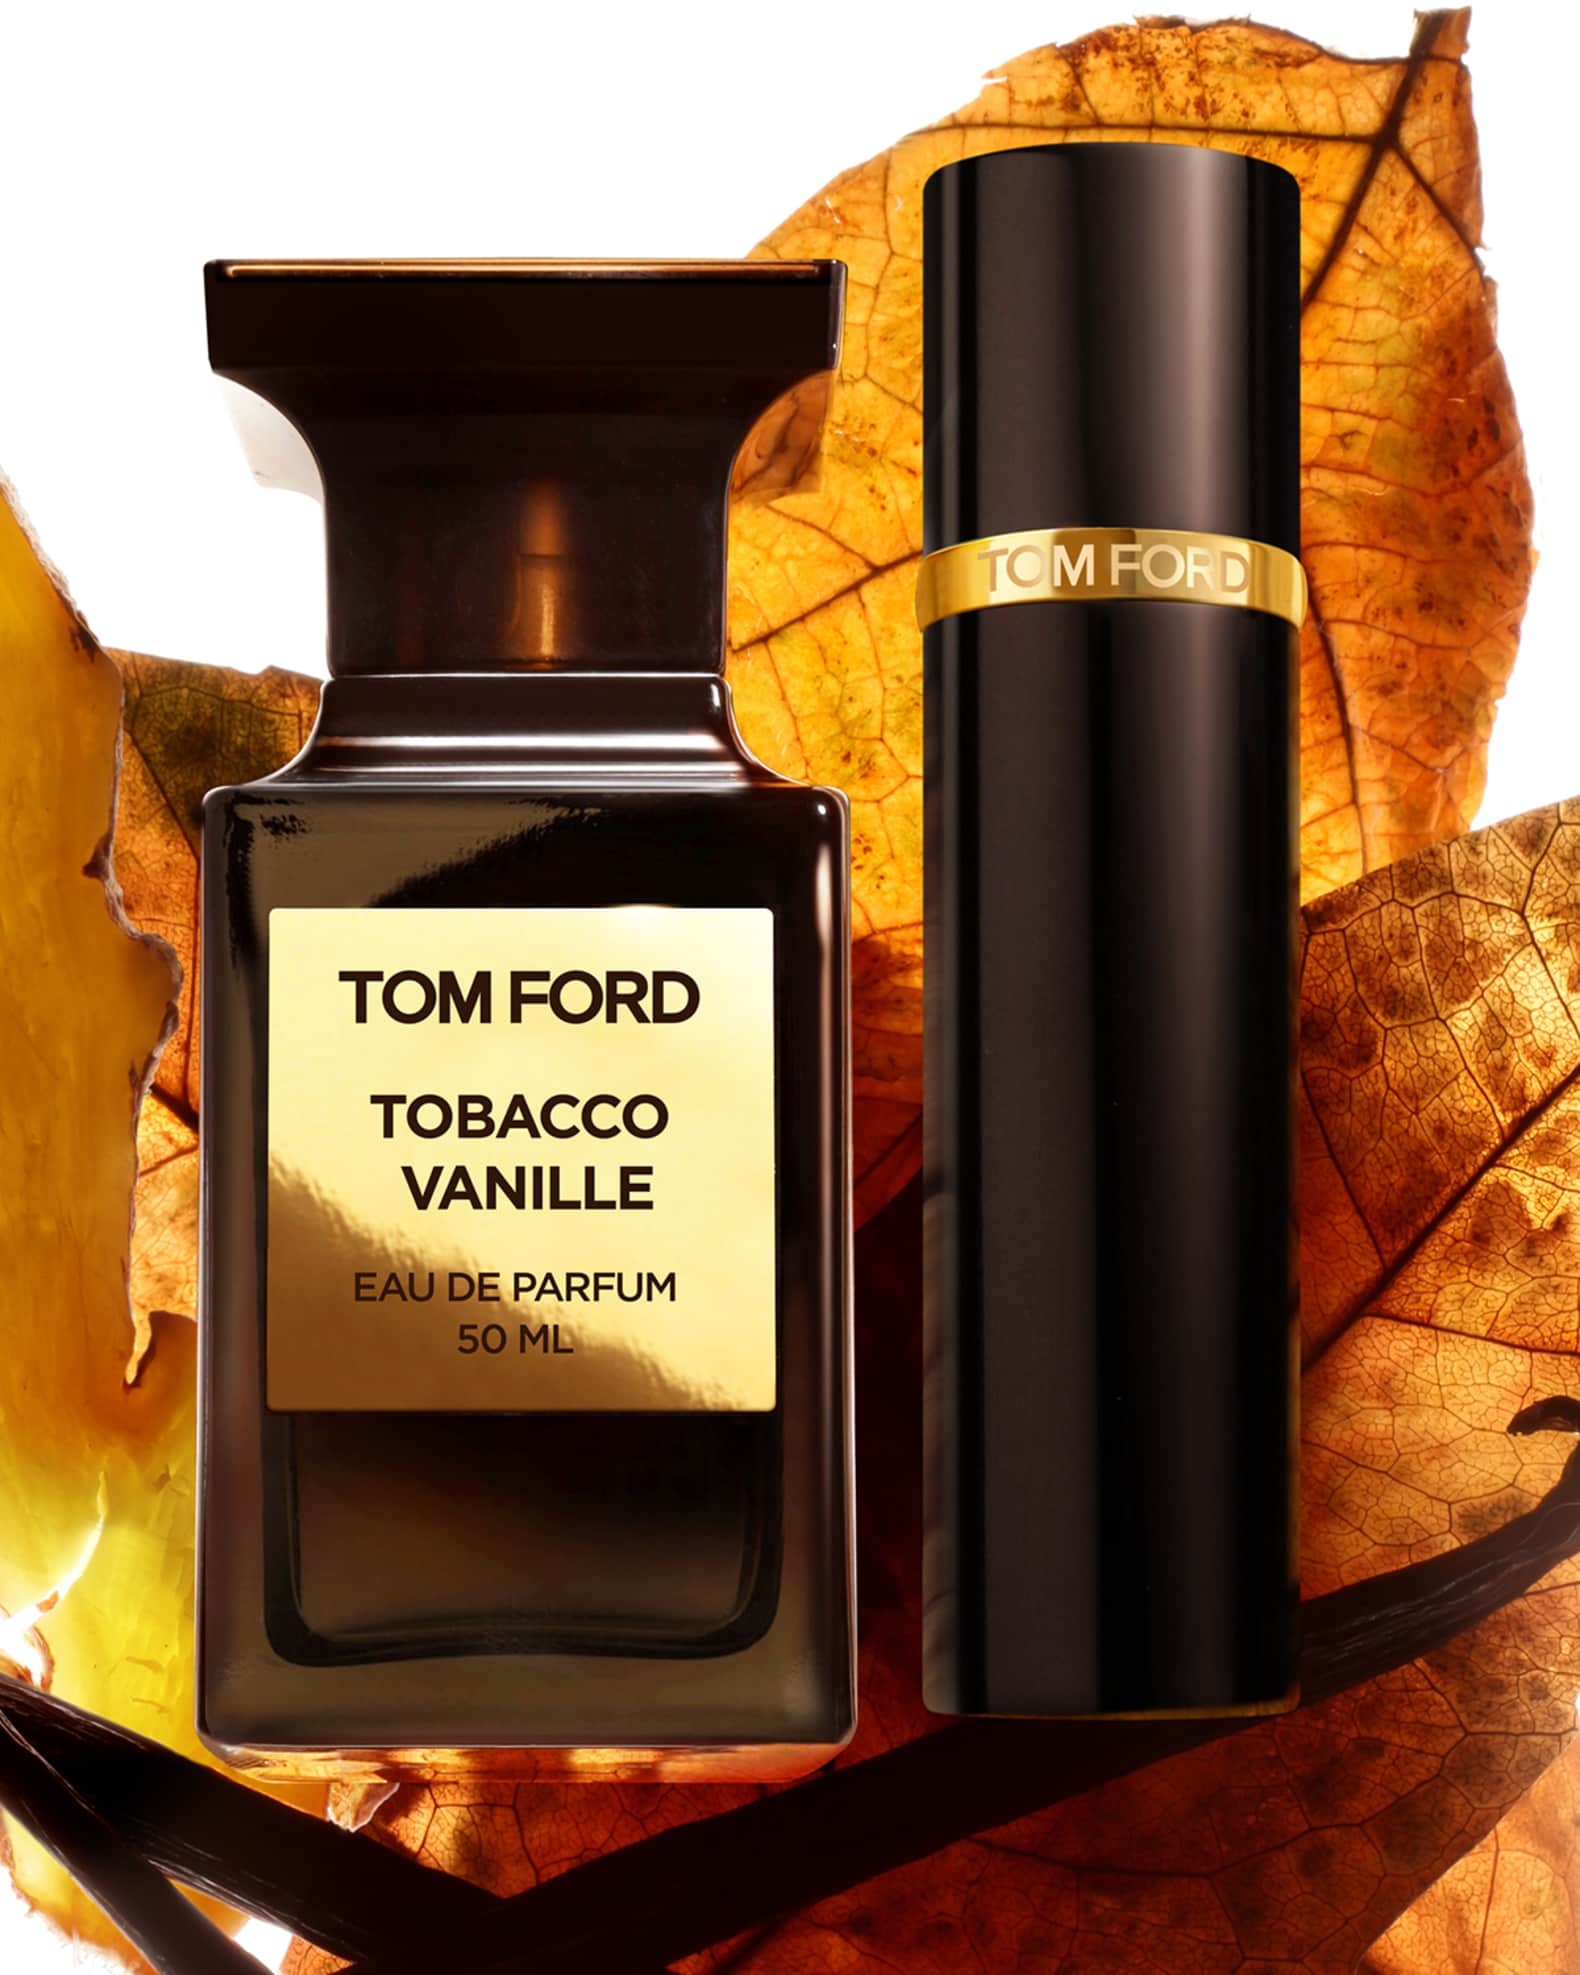 TOM FORD Tobacco Vanille Eau de Parfum Fragrance 250ml Decanter